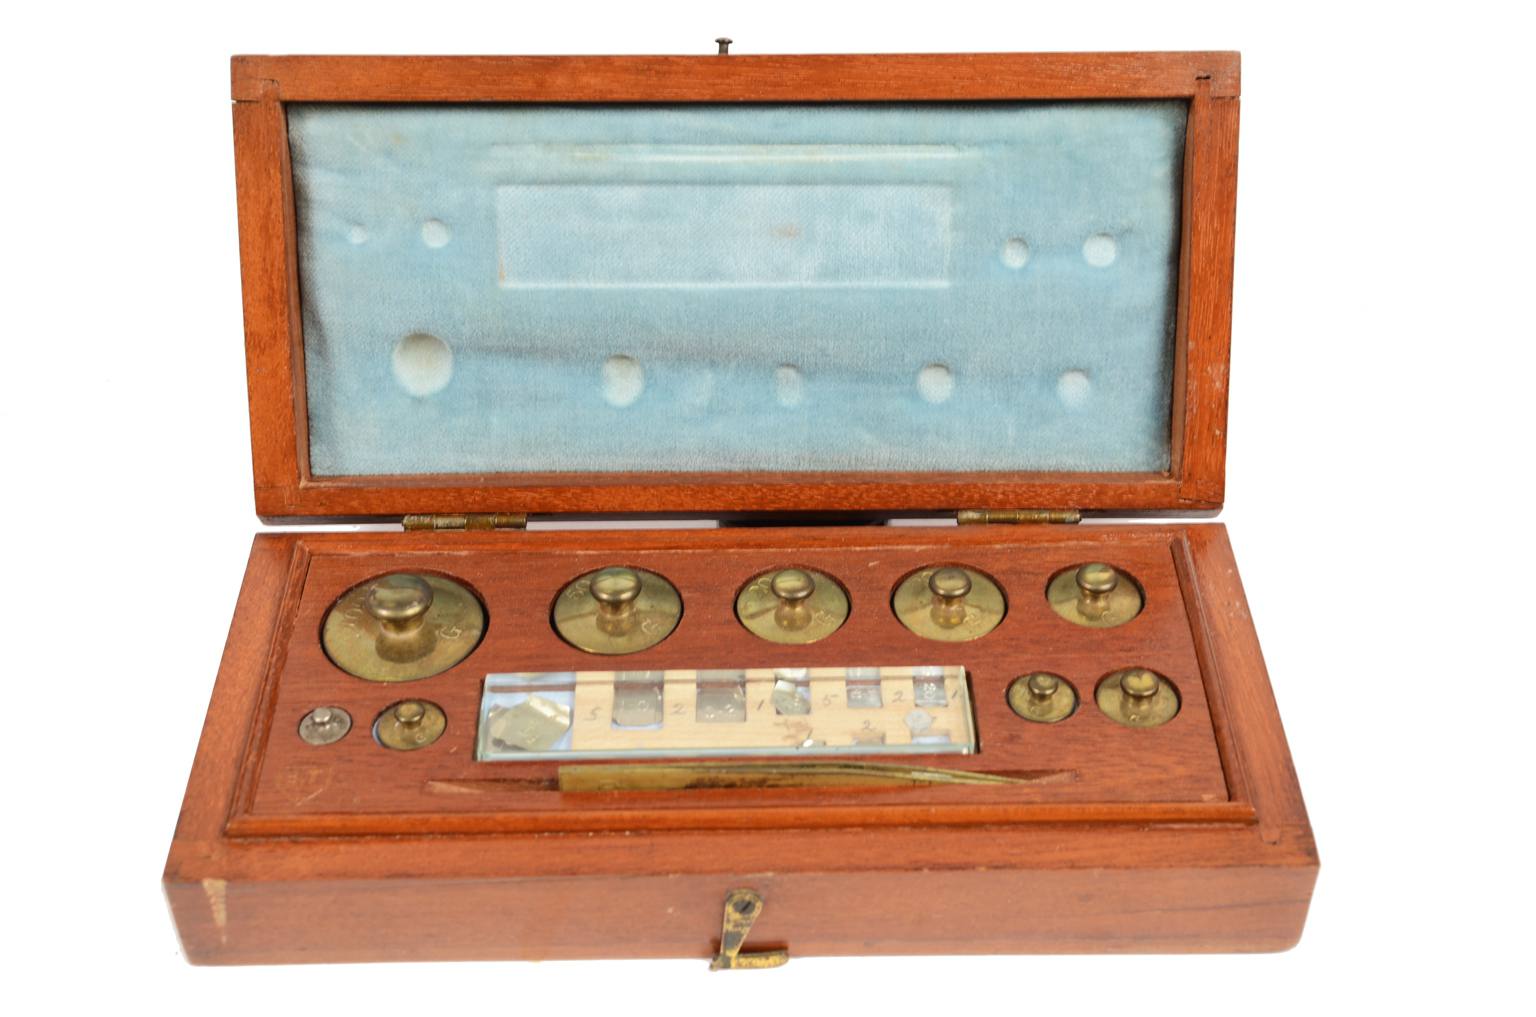 e-Shop/Antique measuring instruments/Code 649 Precision scale